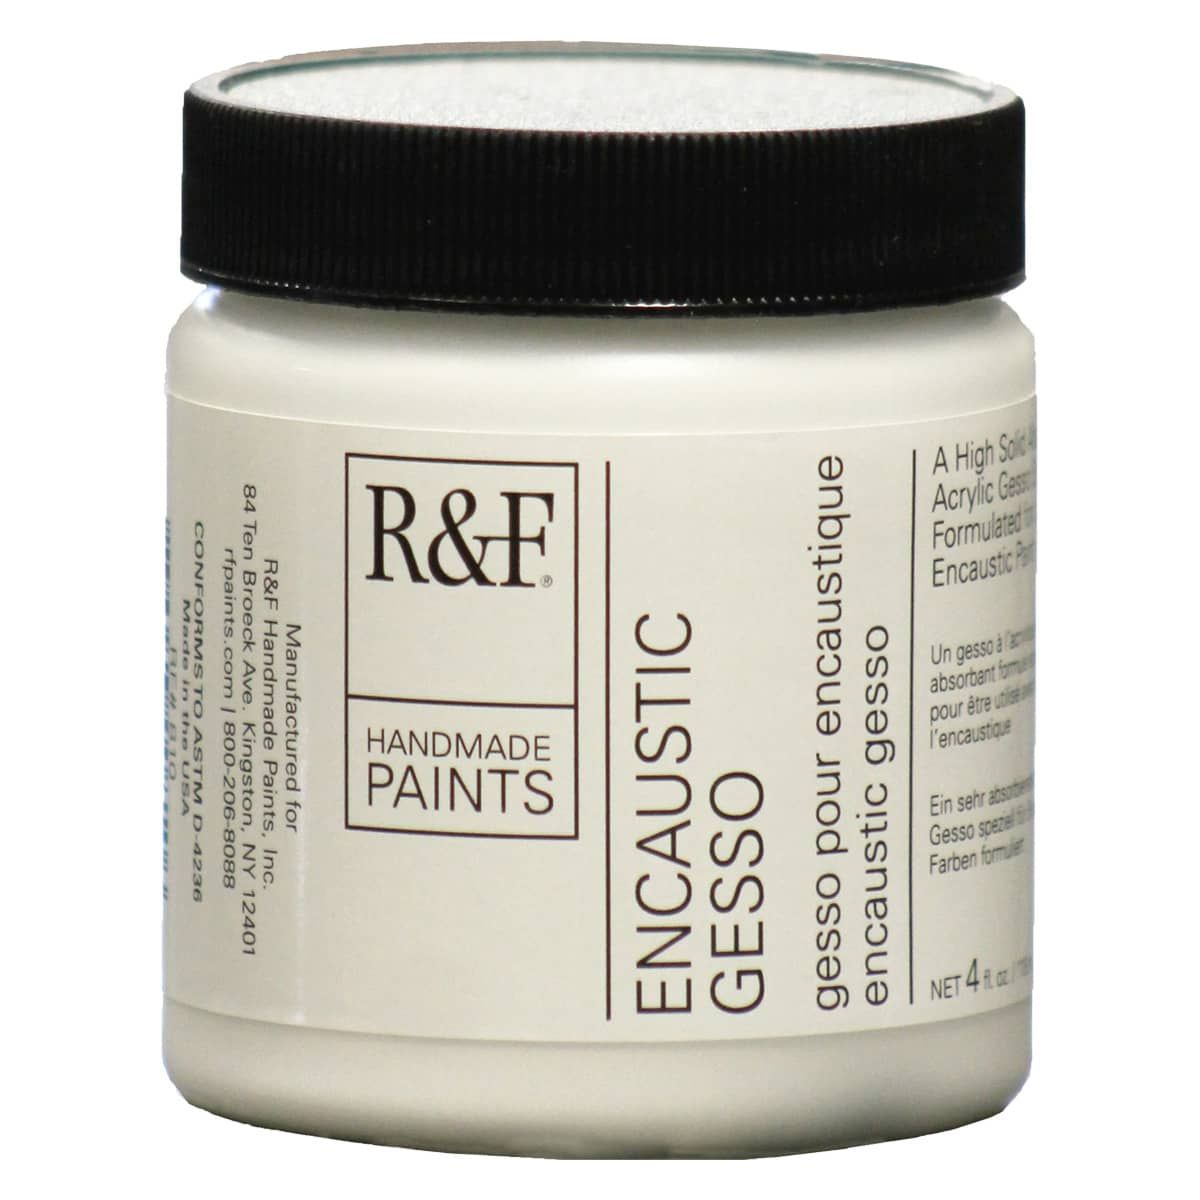 R&F Handmade Paints - Encaustic Gesso, 4oz Jar